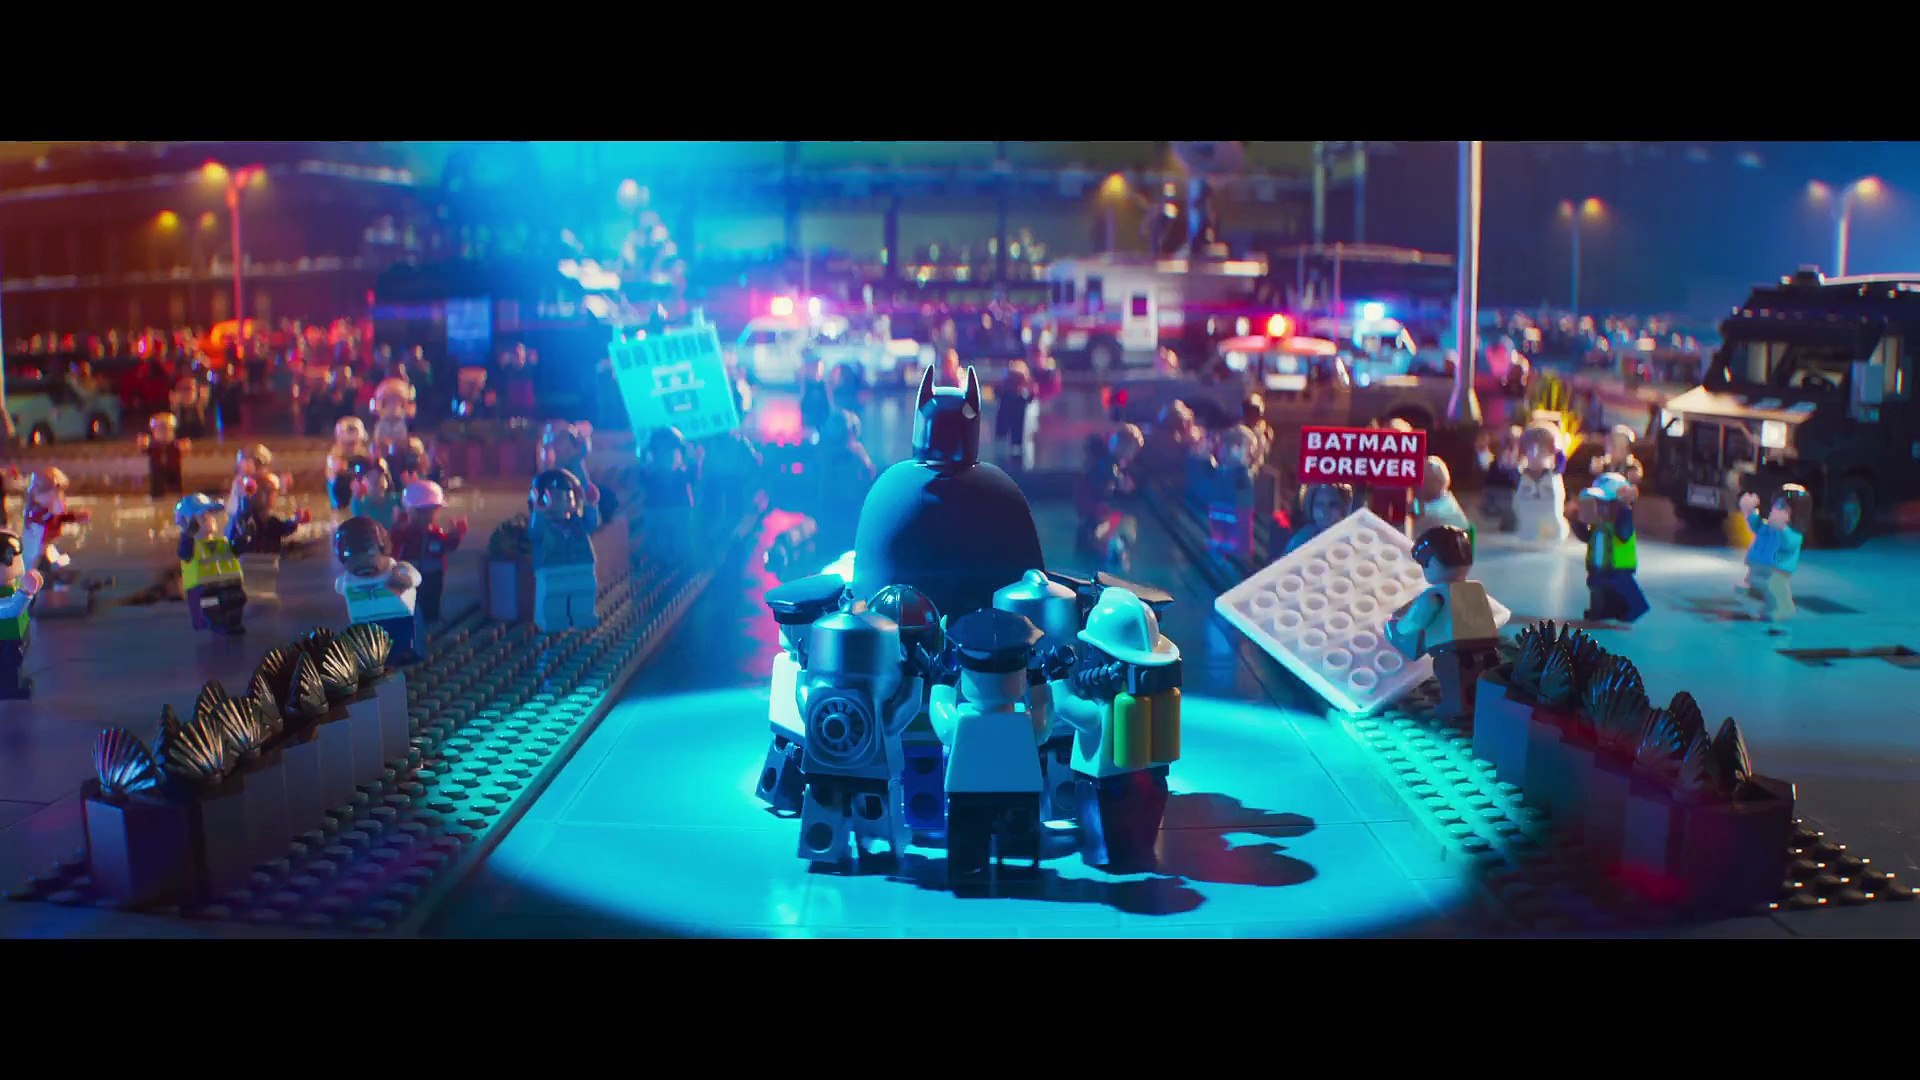 The Lego Batman Movie Extended TV Spot - Joker (2017) - Will